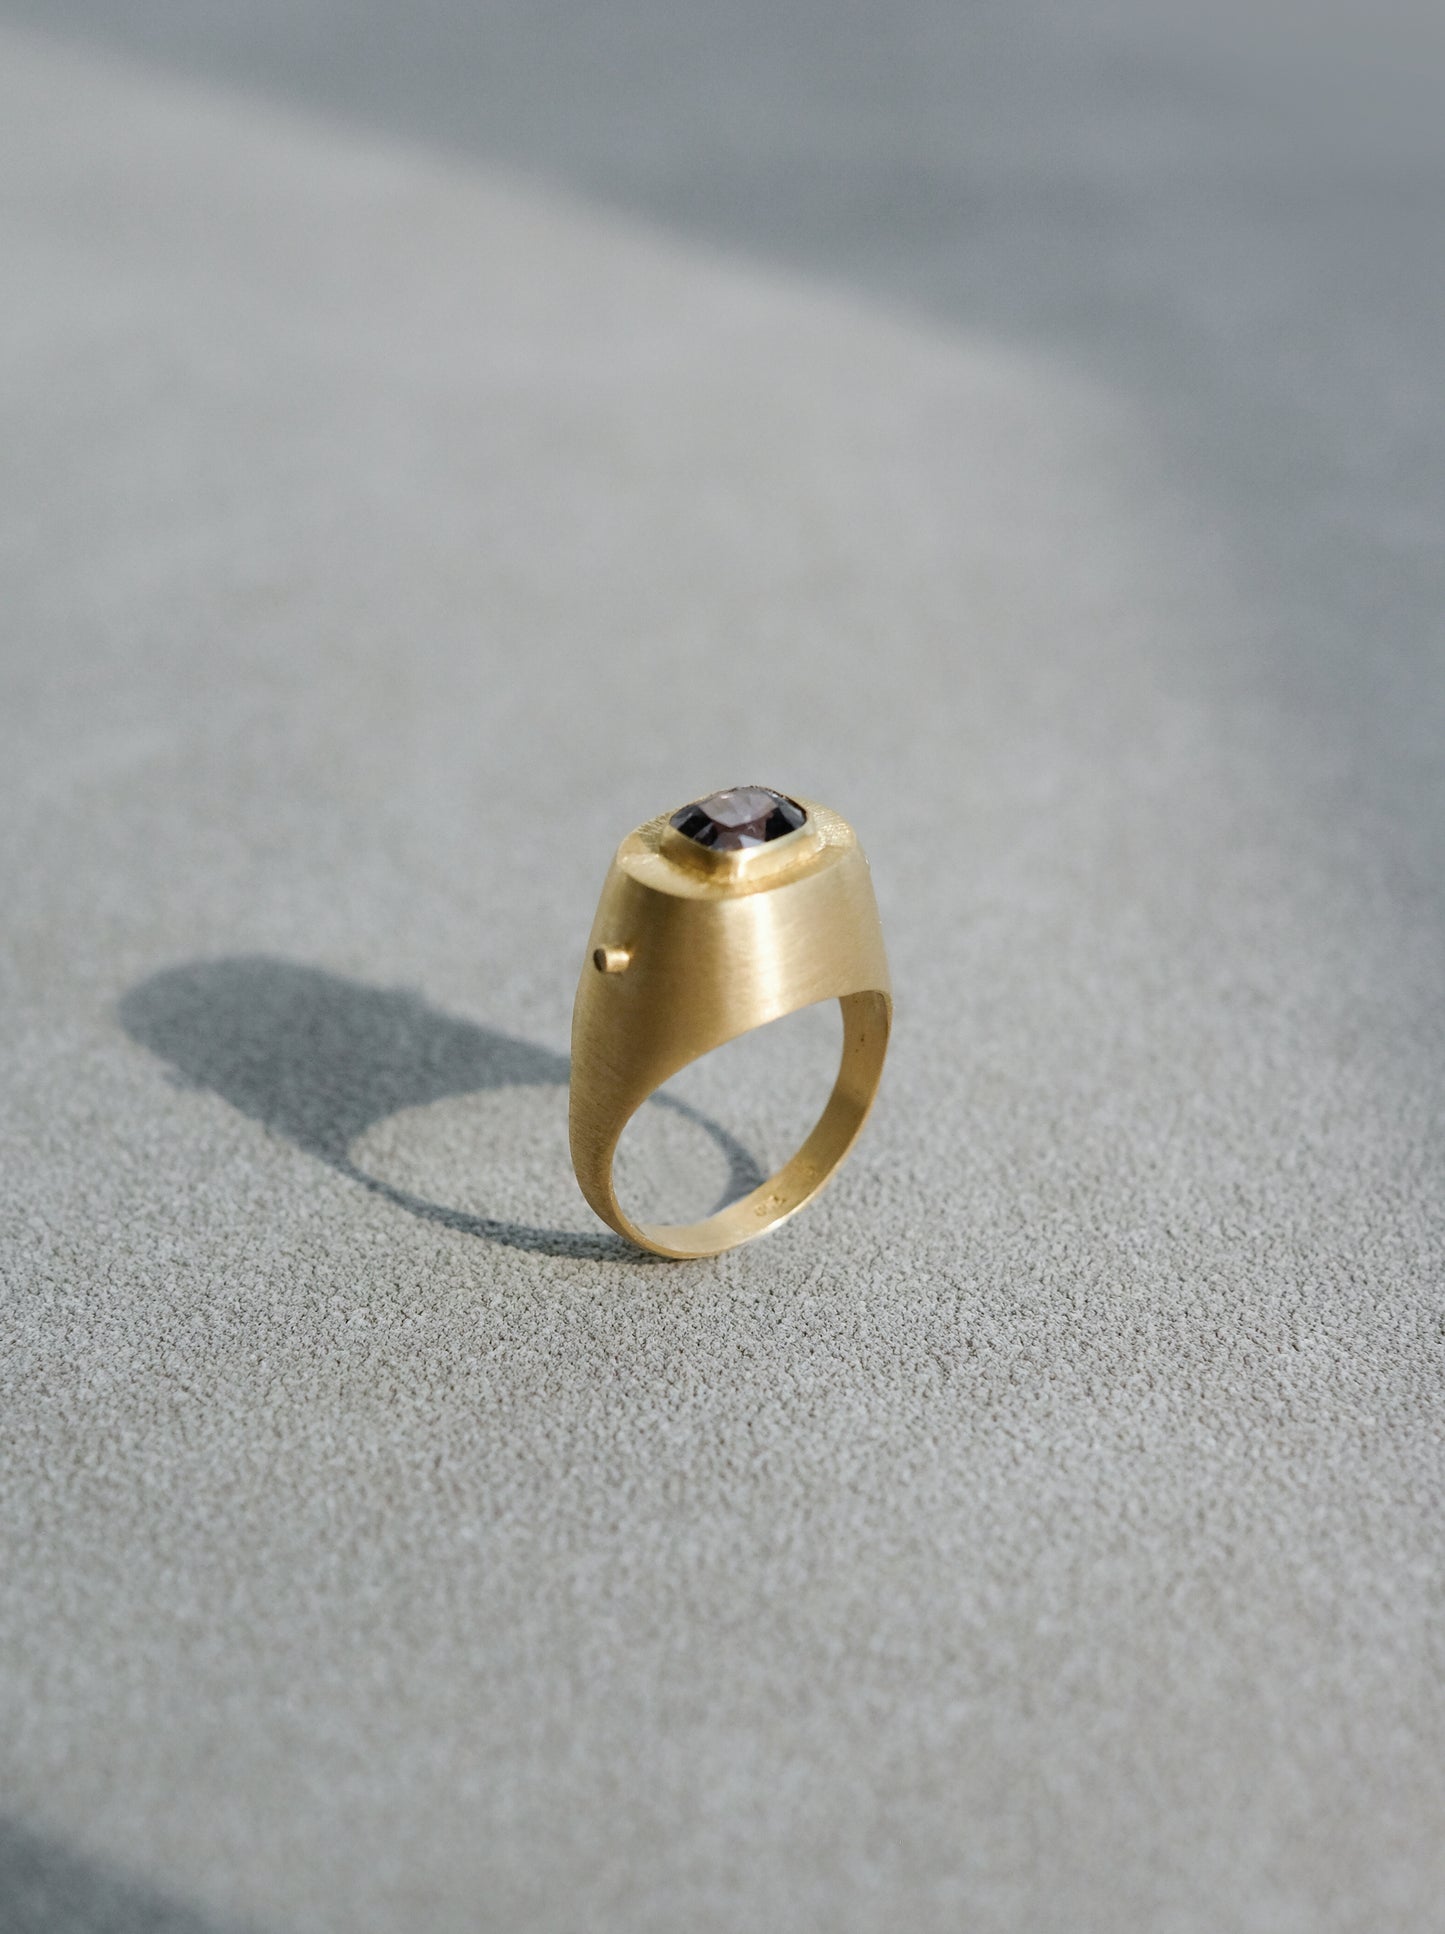 Renaissance Series Sapphire Signet Ring